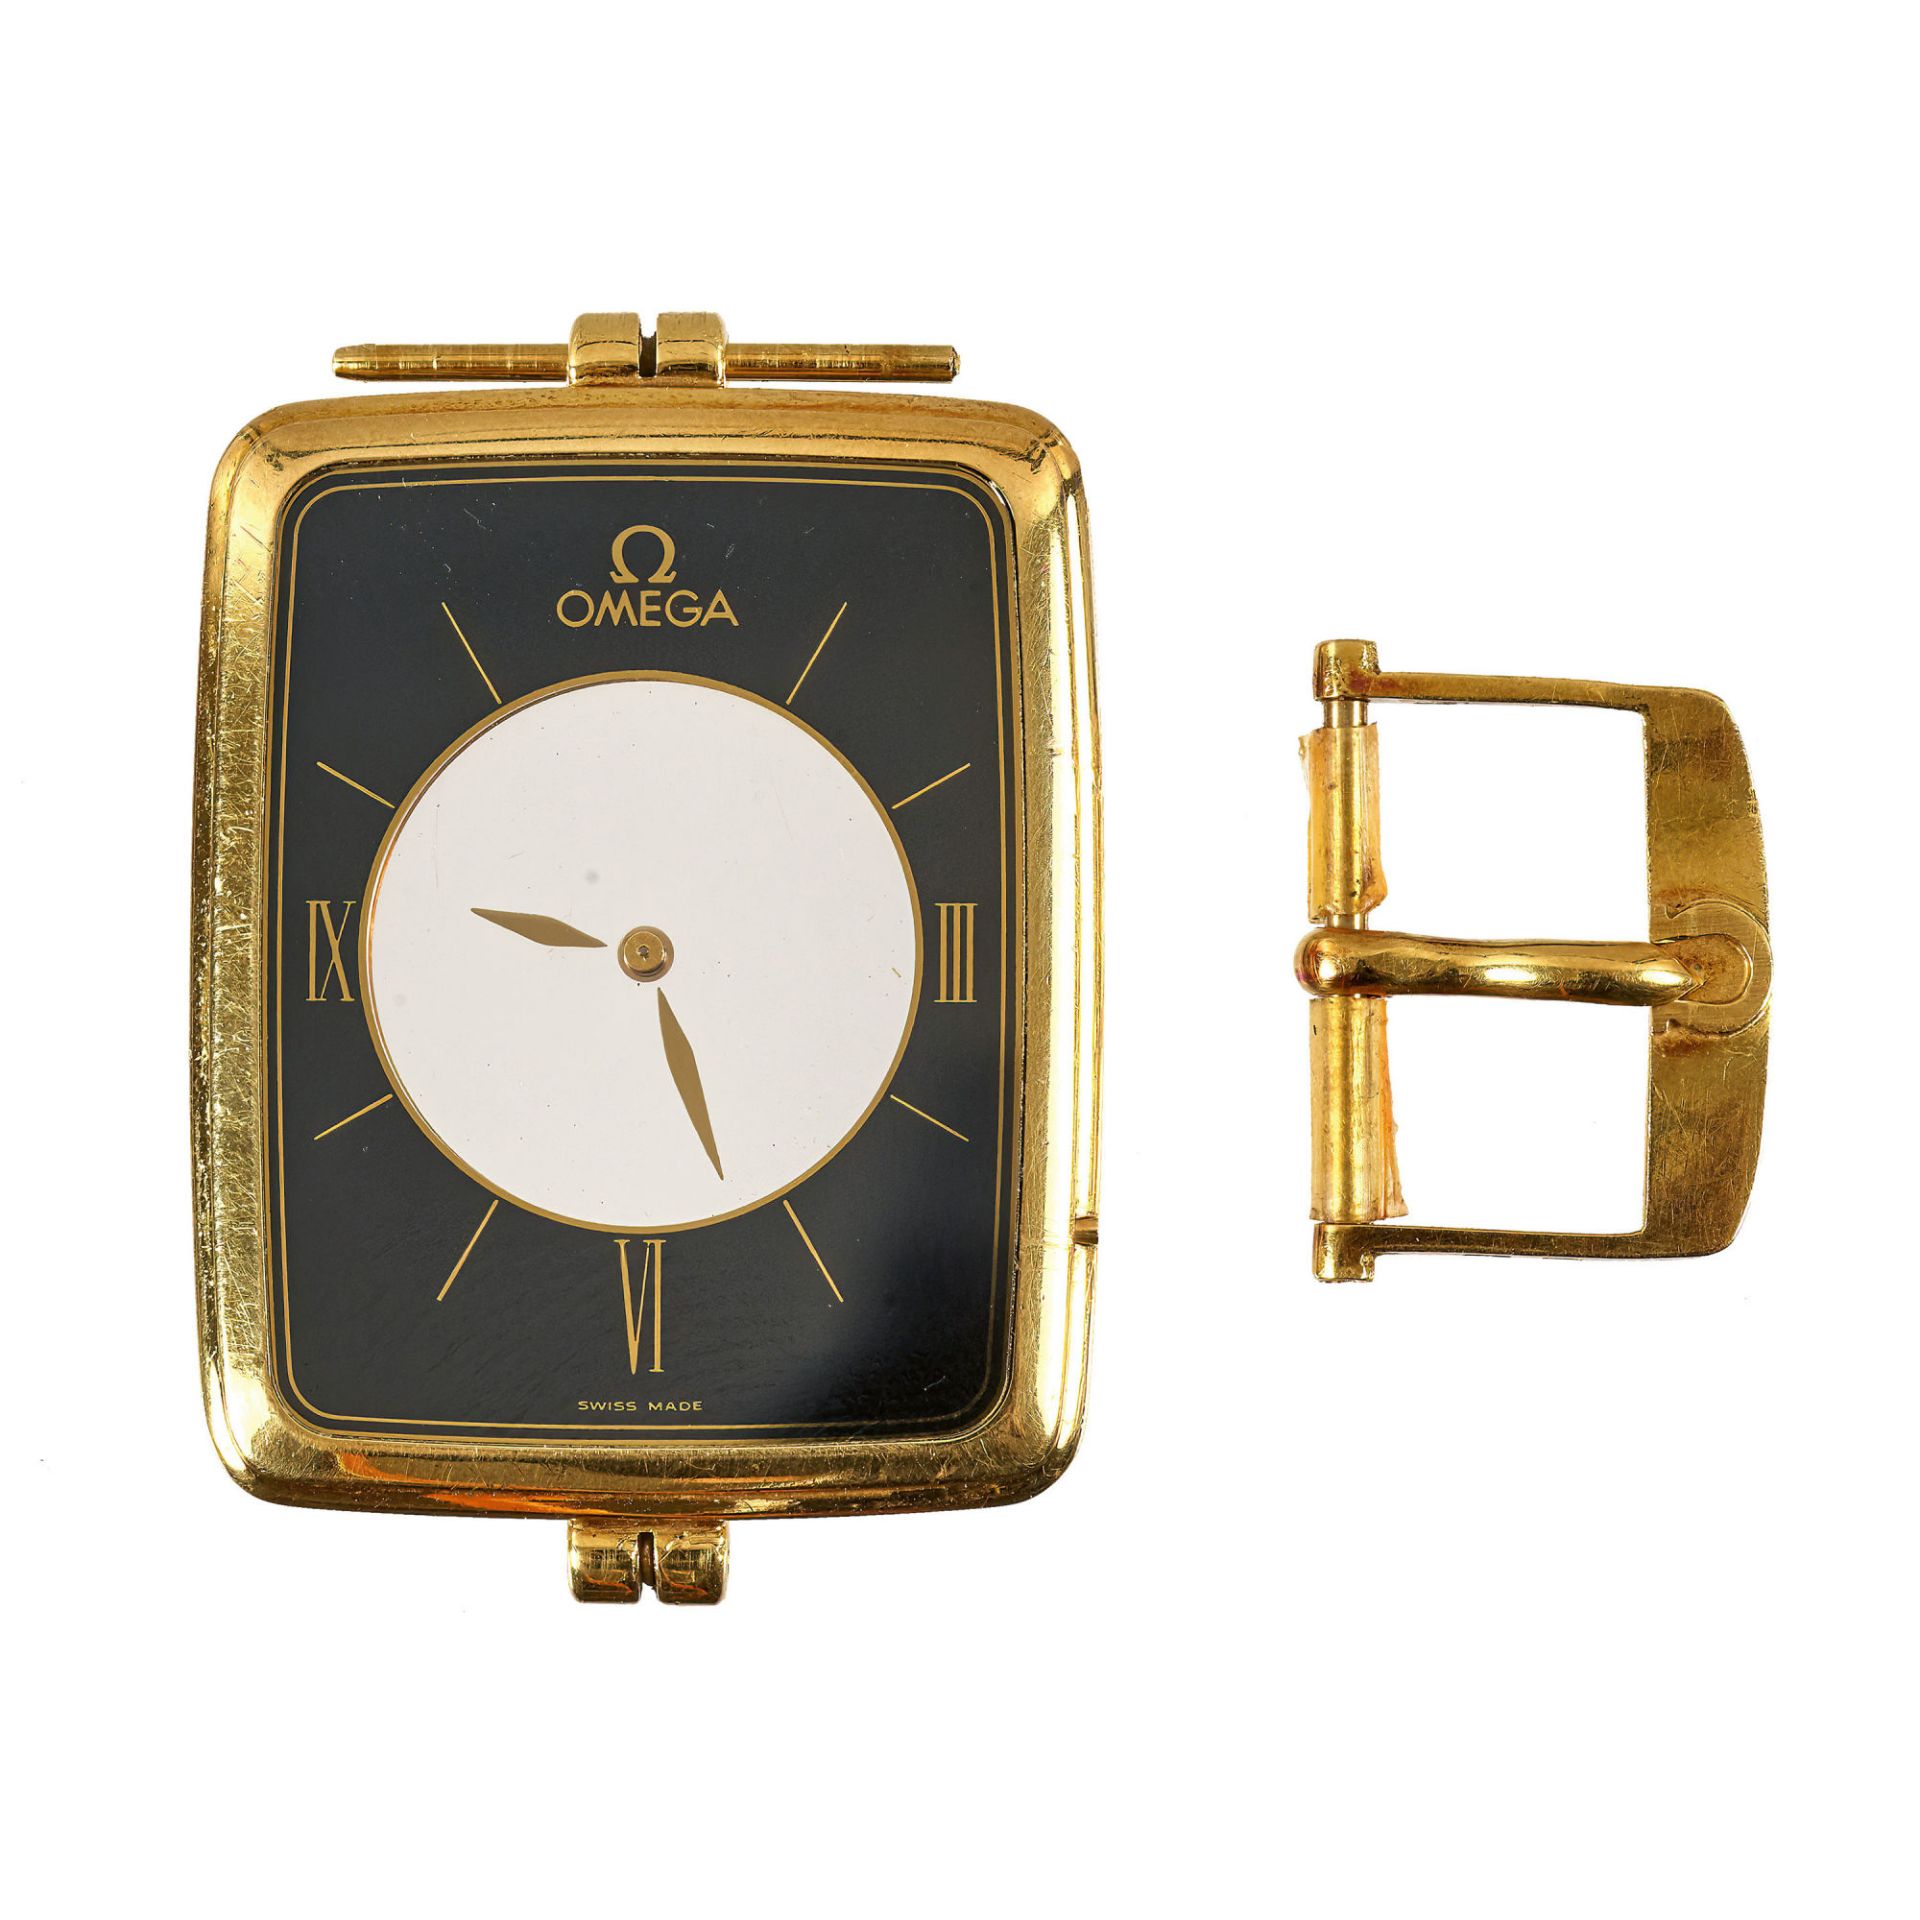 OMEGA: Herrenarmbanduhr "La Magique". / Omega, Gentleman's wristwatch La Magique. - Image 2 of 2